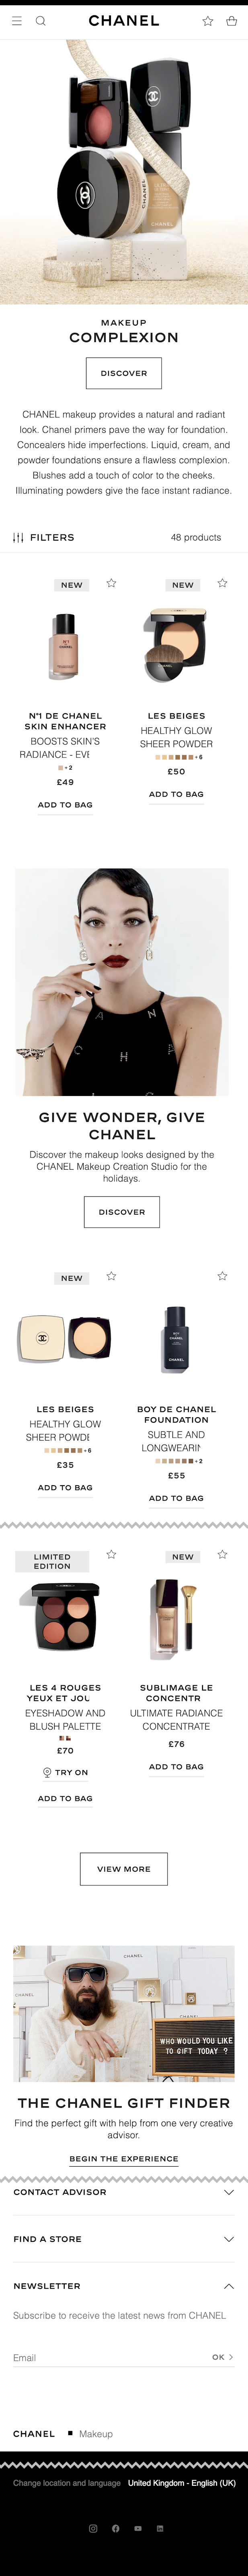 Mobile screenshot of Chanel